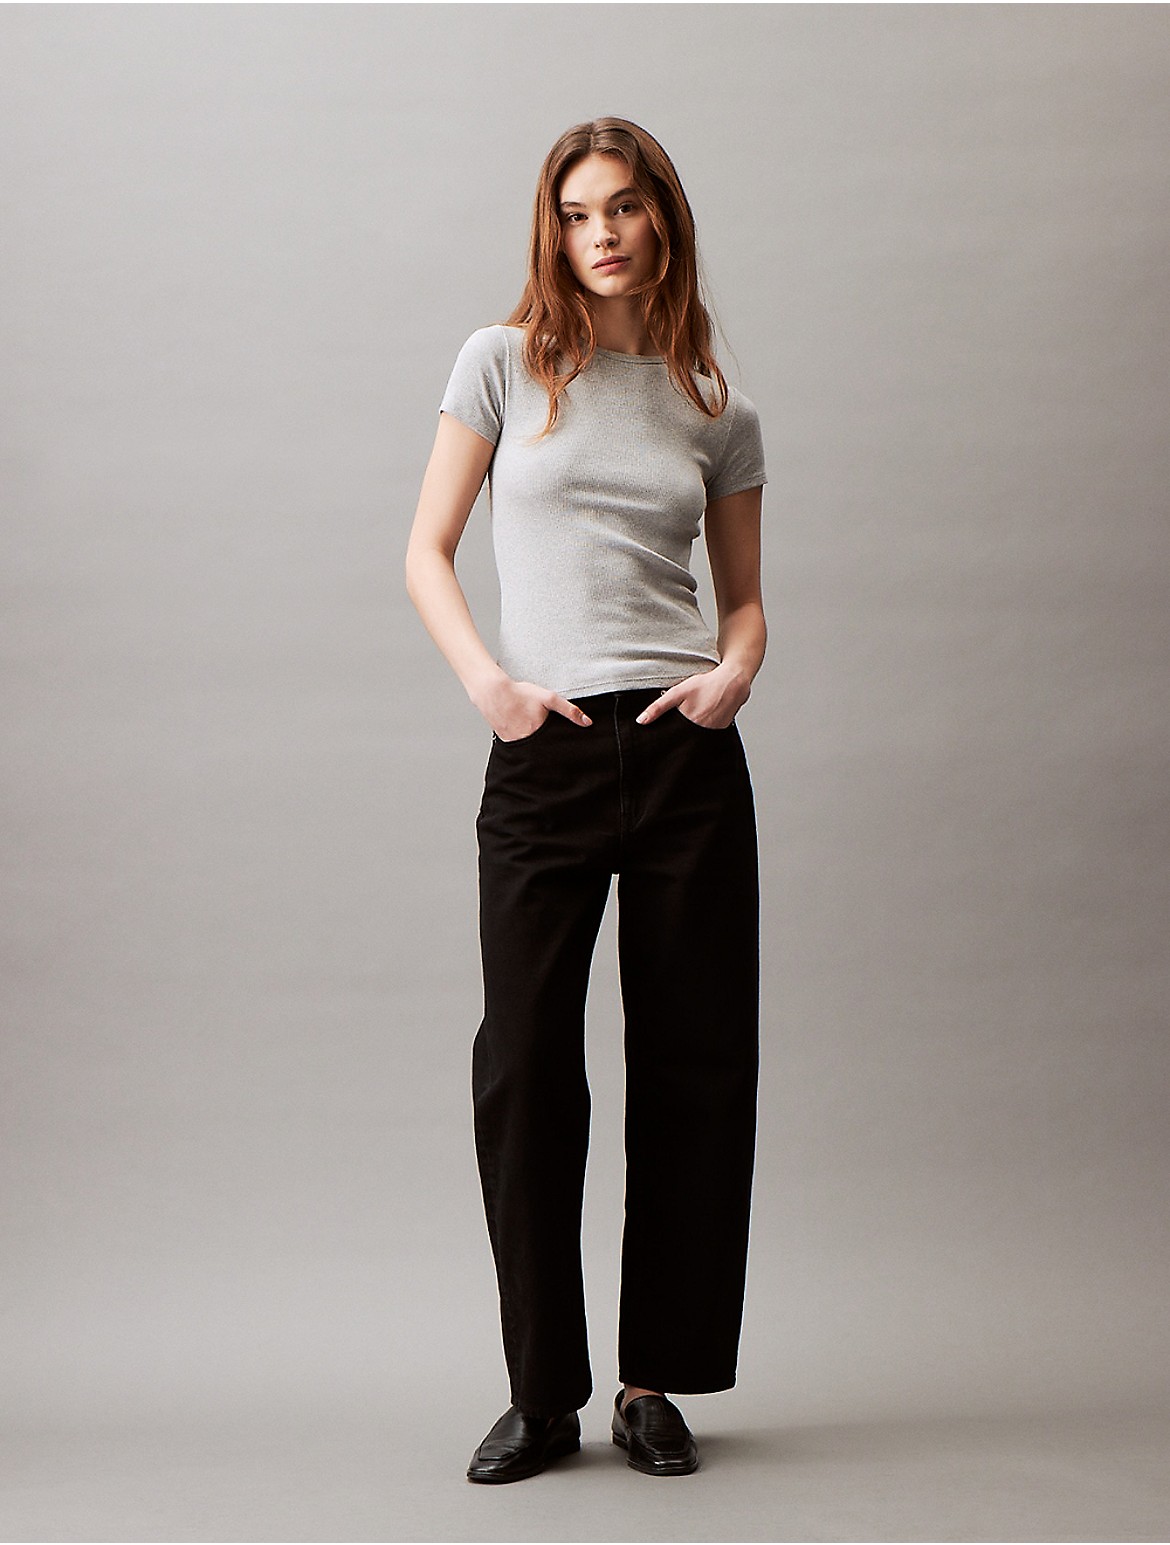 Calvin Klein Women's Contour Rib Slim Fit T-Shirt - Grey - XS